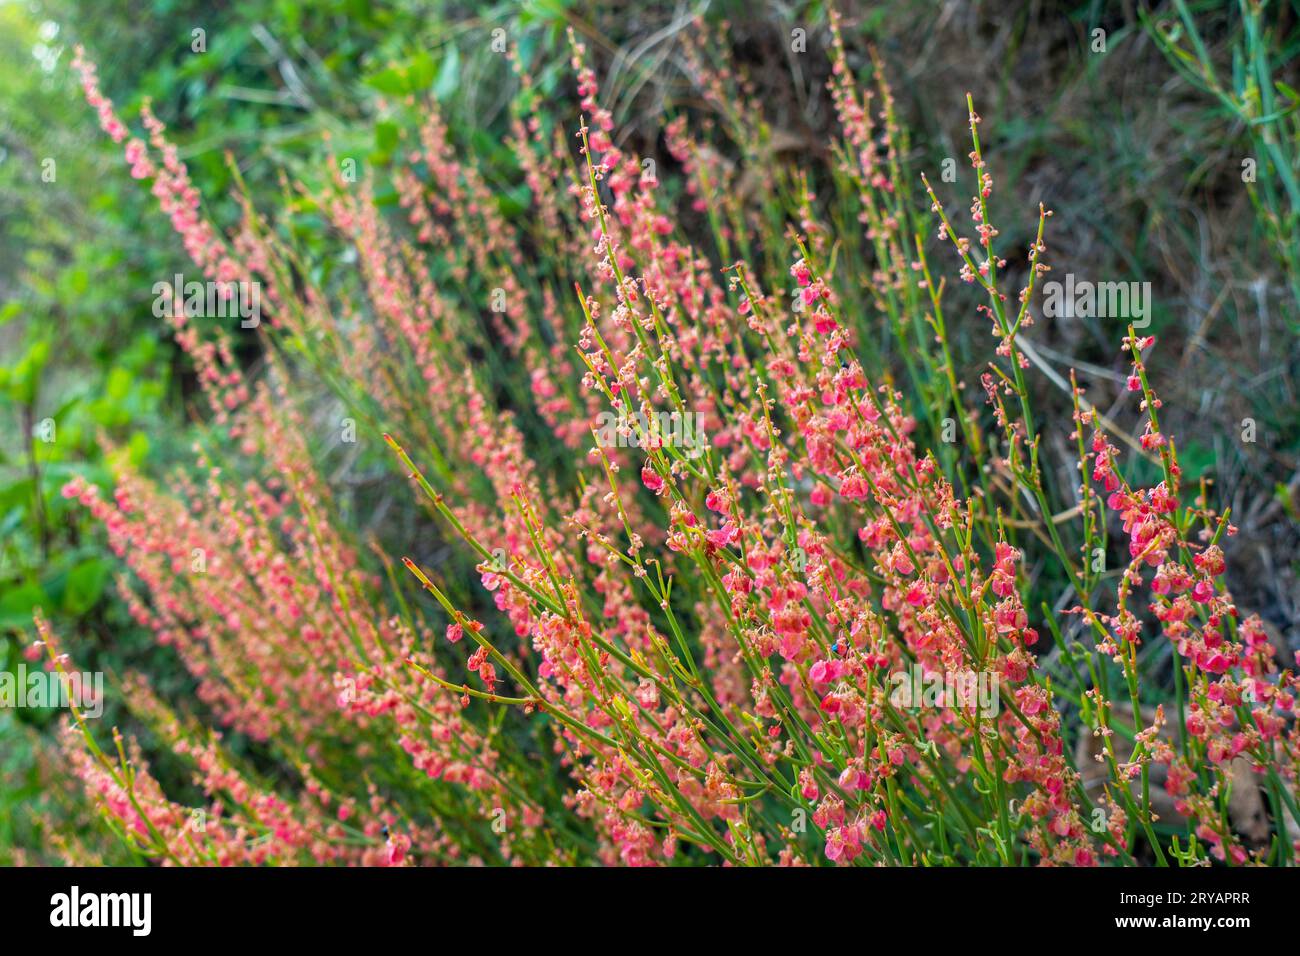 Arrowleaf Dock (Rumex hastatus), a petite flowering shrub in the hills of Uttarakhand, India Stock Photo